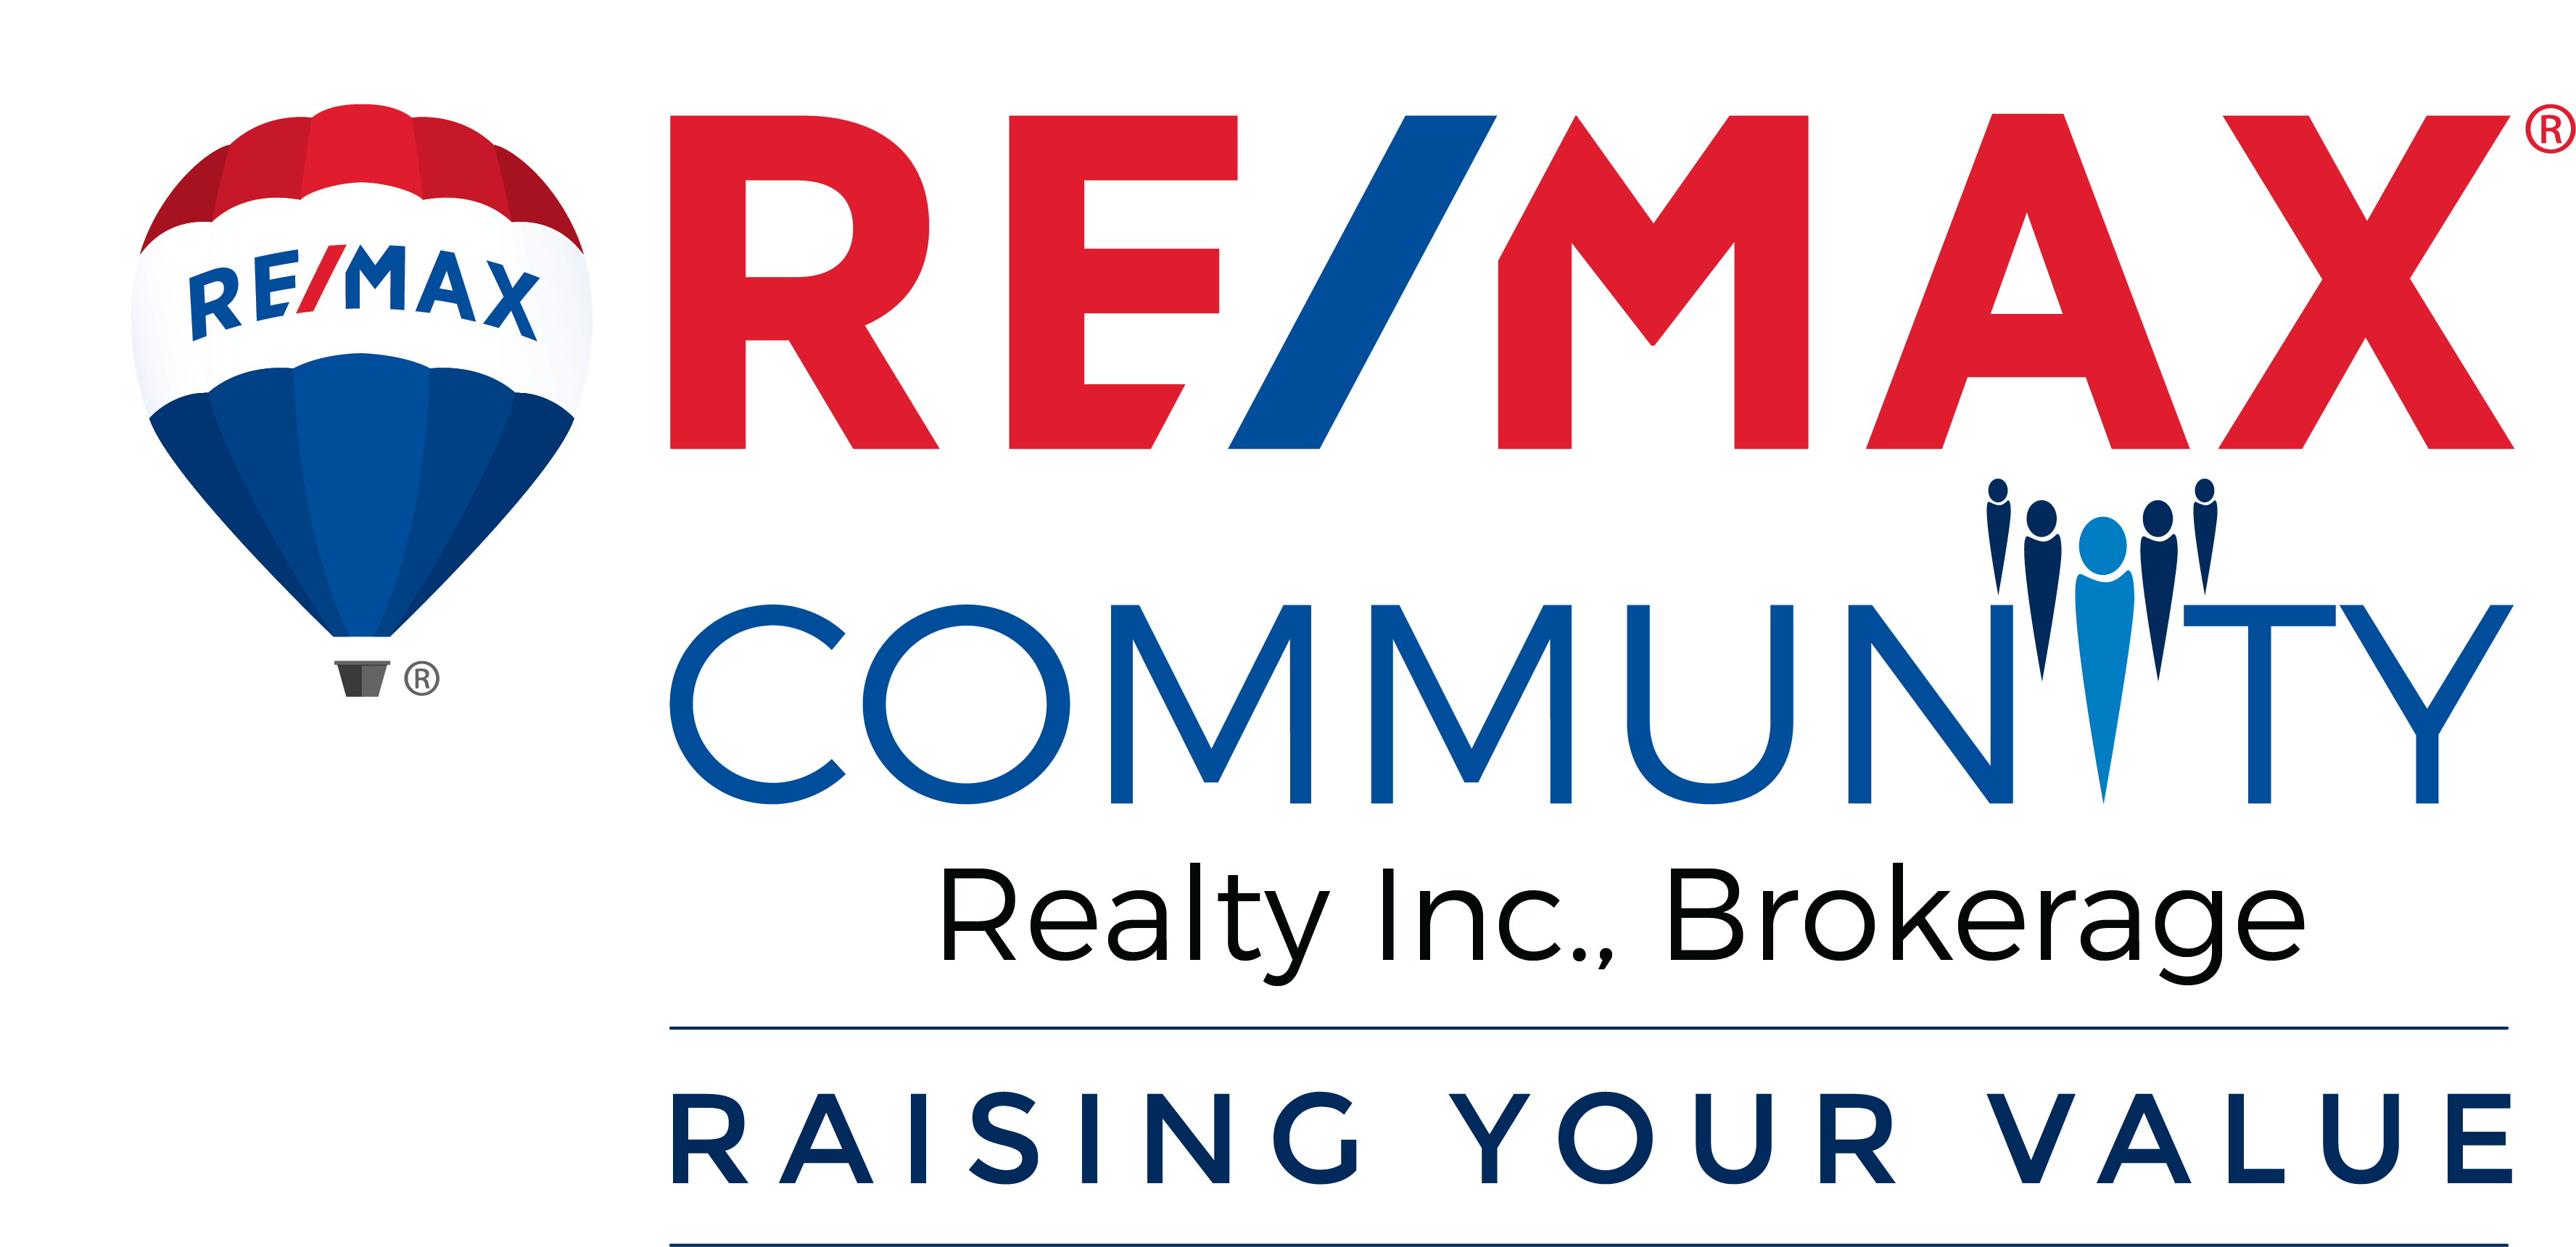 Remax Community